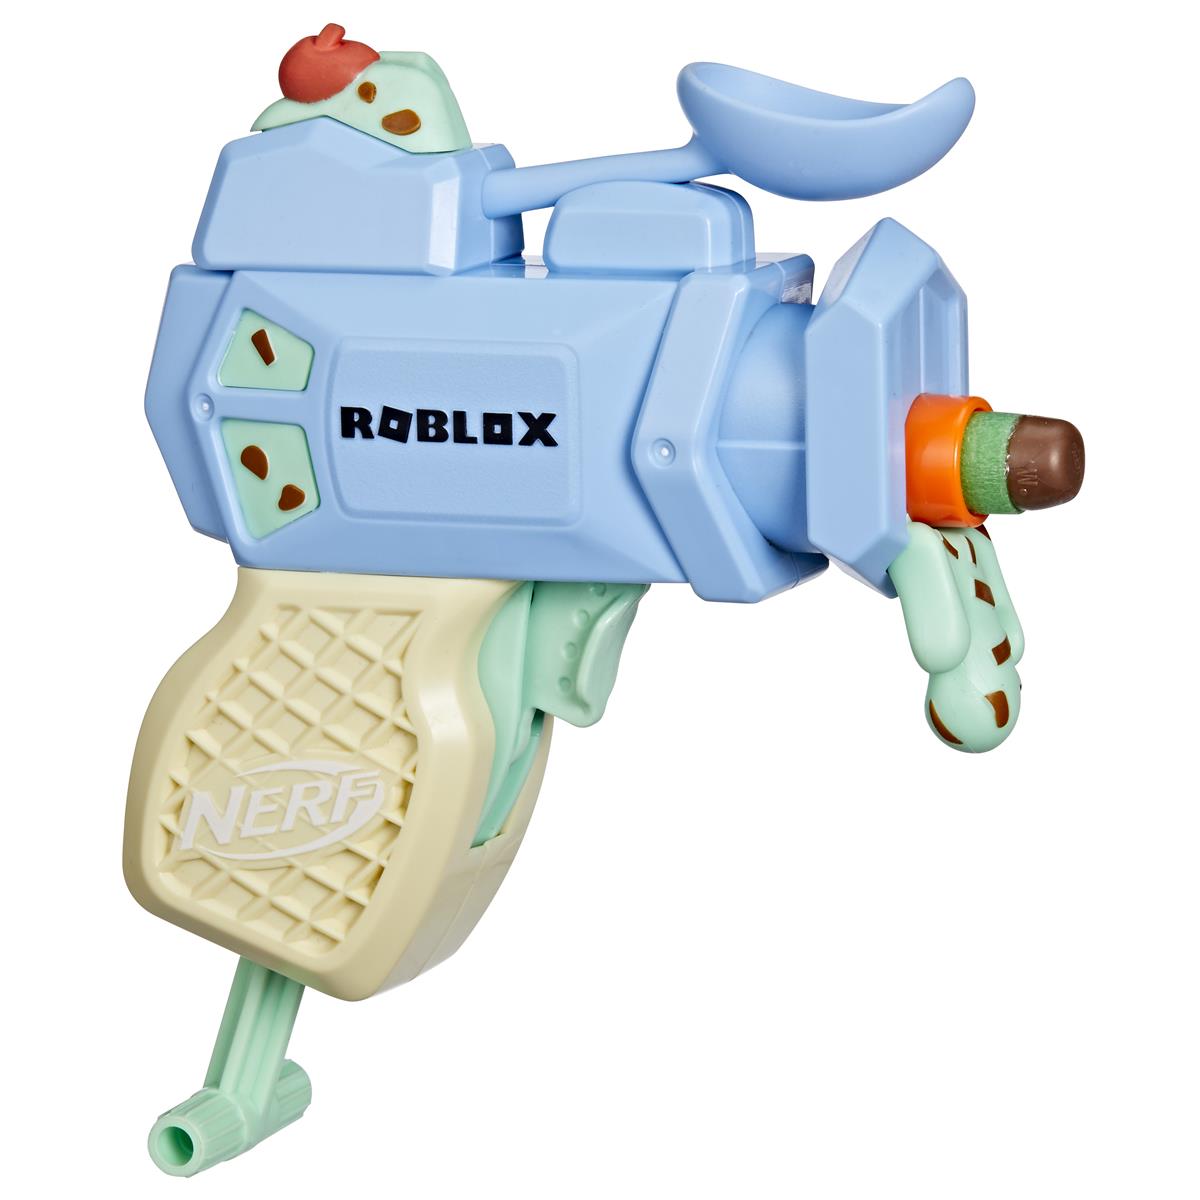 NERF Roblox Microshots TDS The Mint Choco Freezer